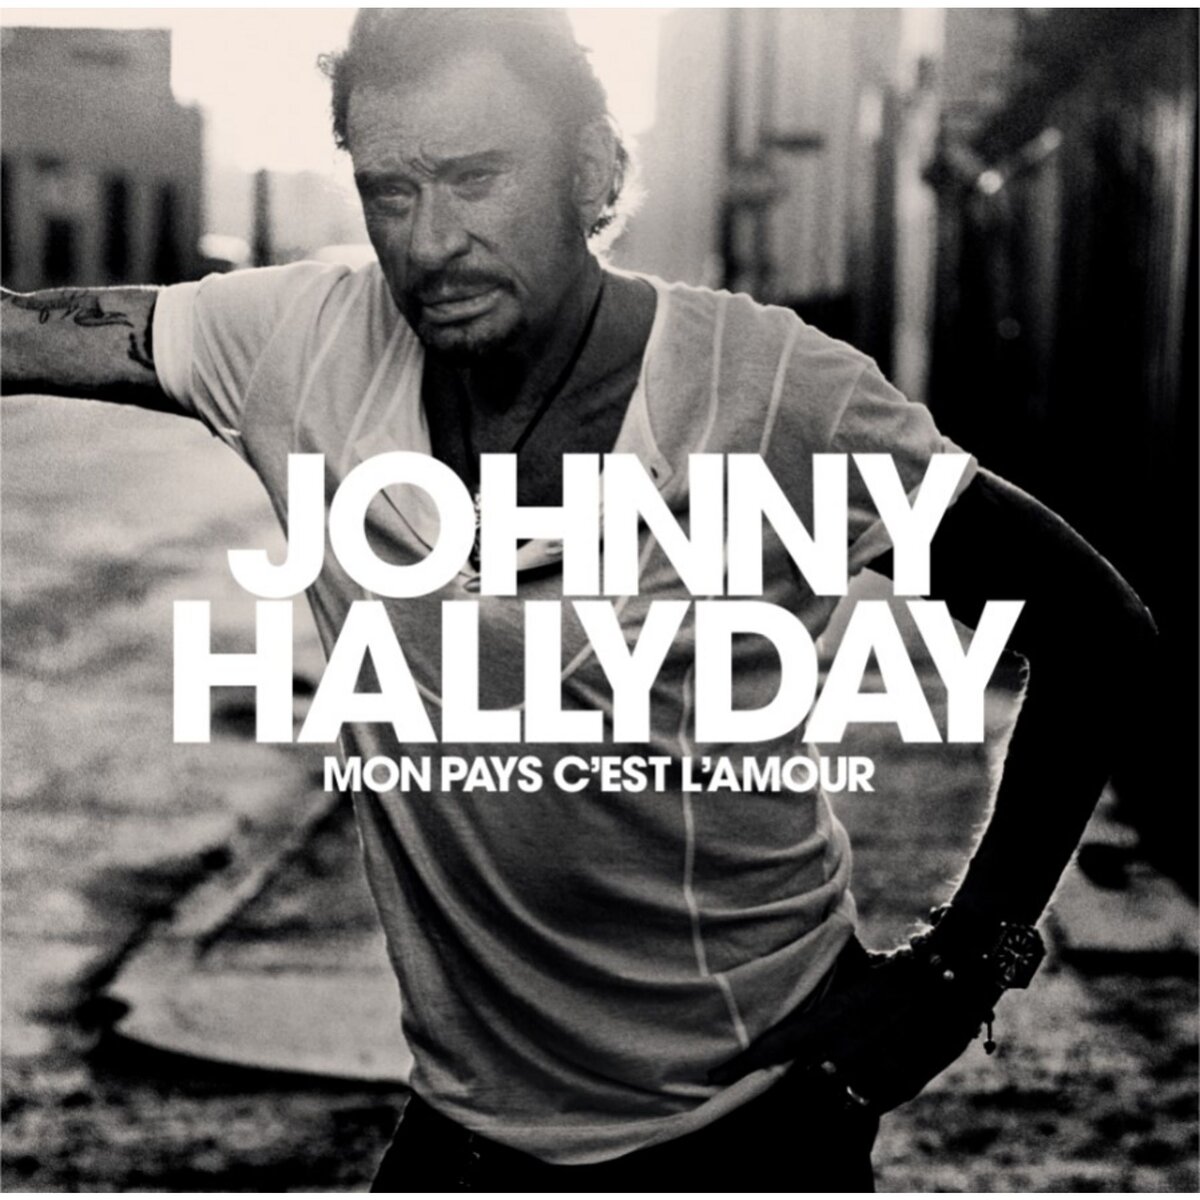 Mon pays c'est l'amour - Johnny Hallyday - Edition Collector Vinyle